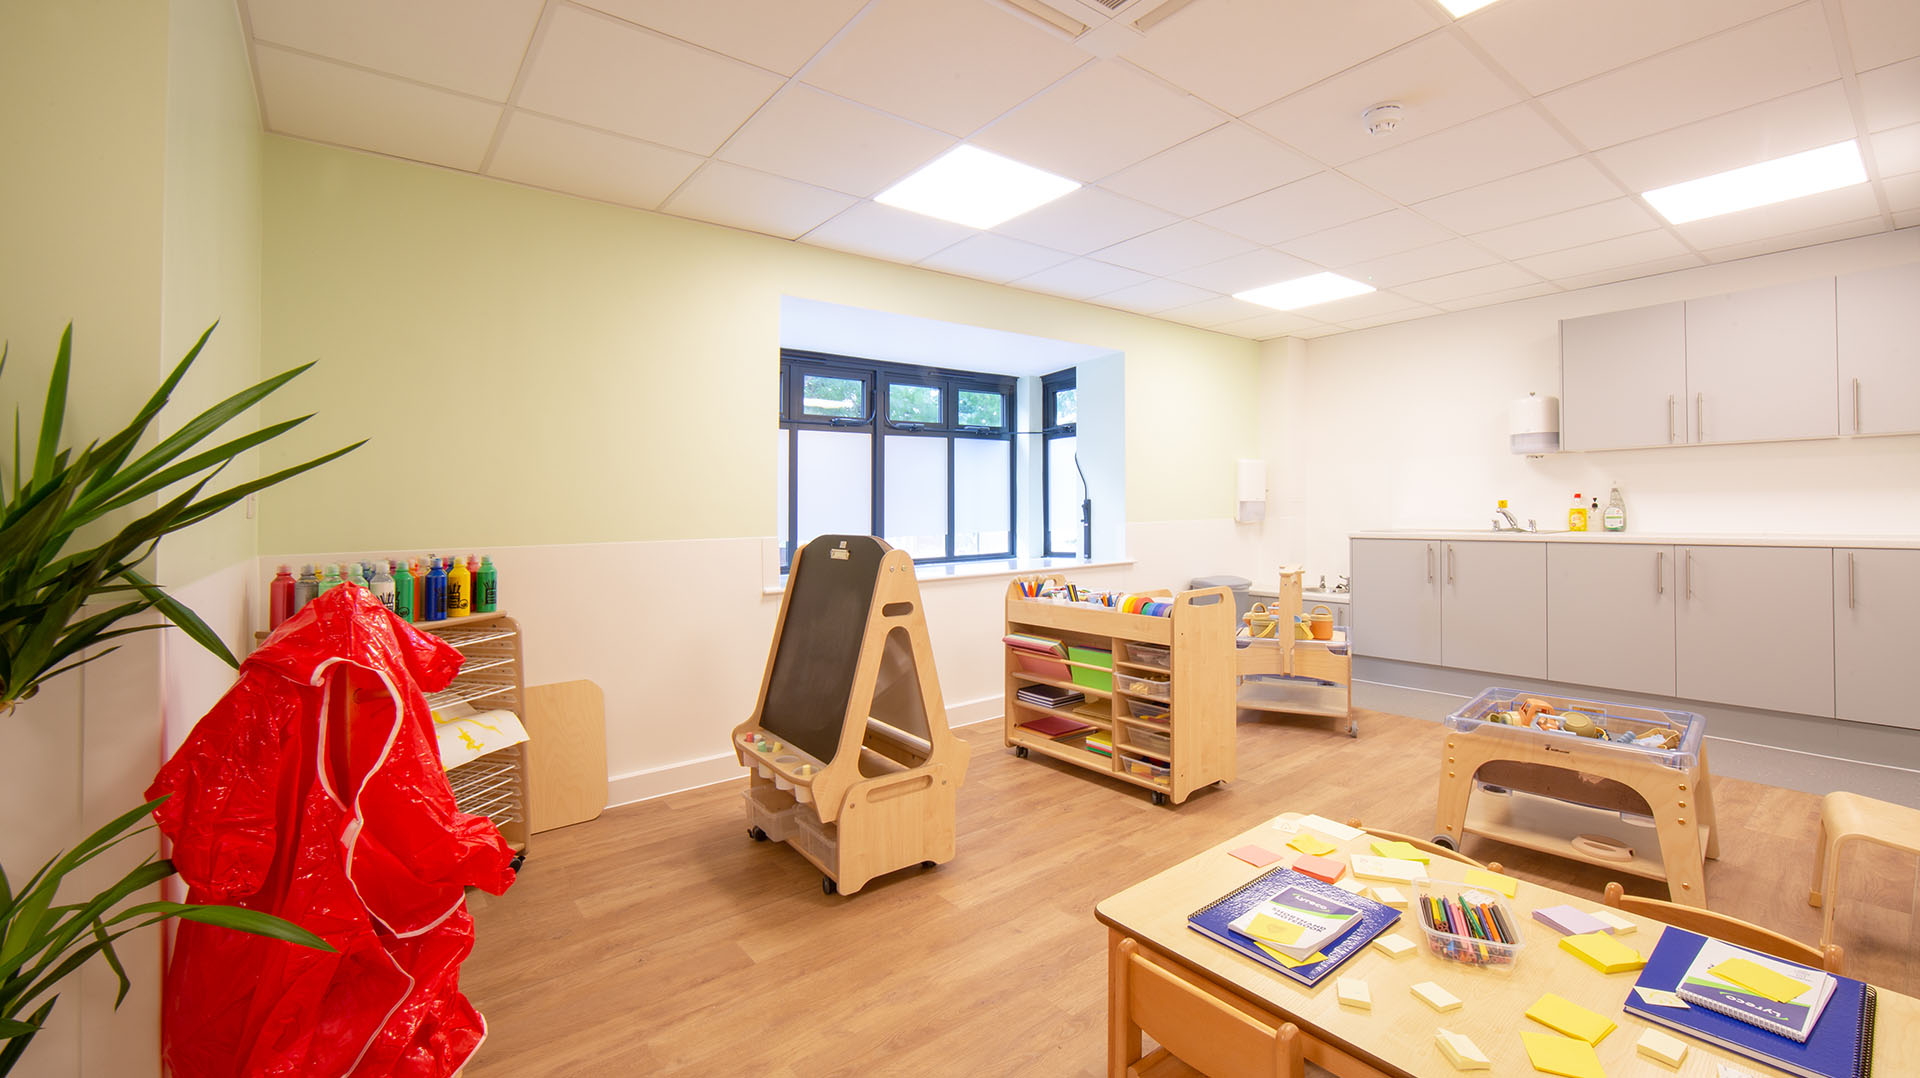 Buckhurst Hill Day Nursery and Preschool